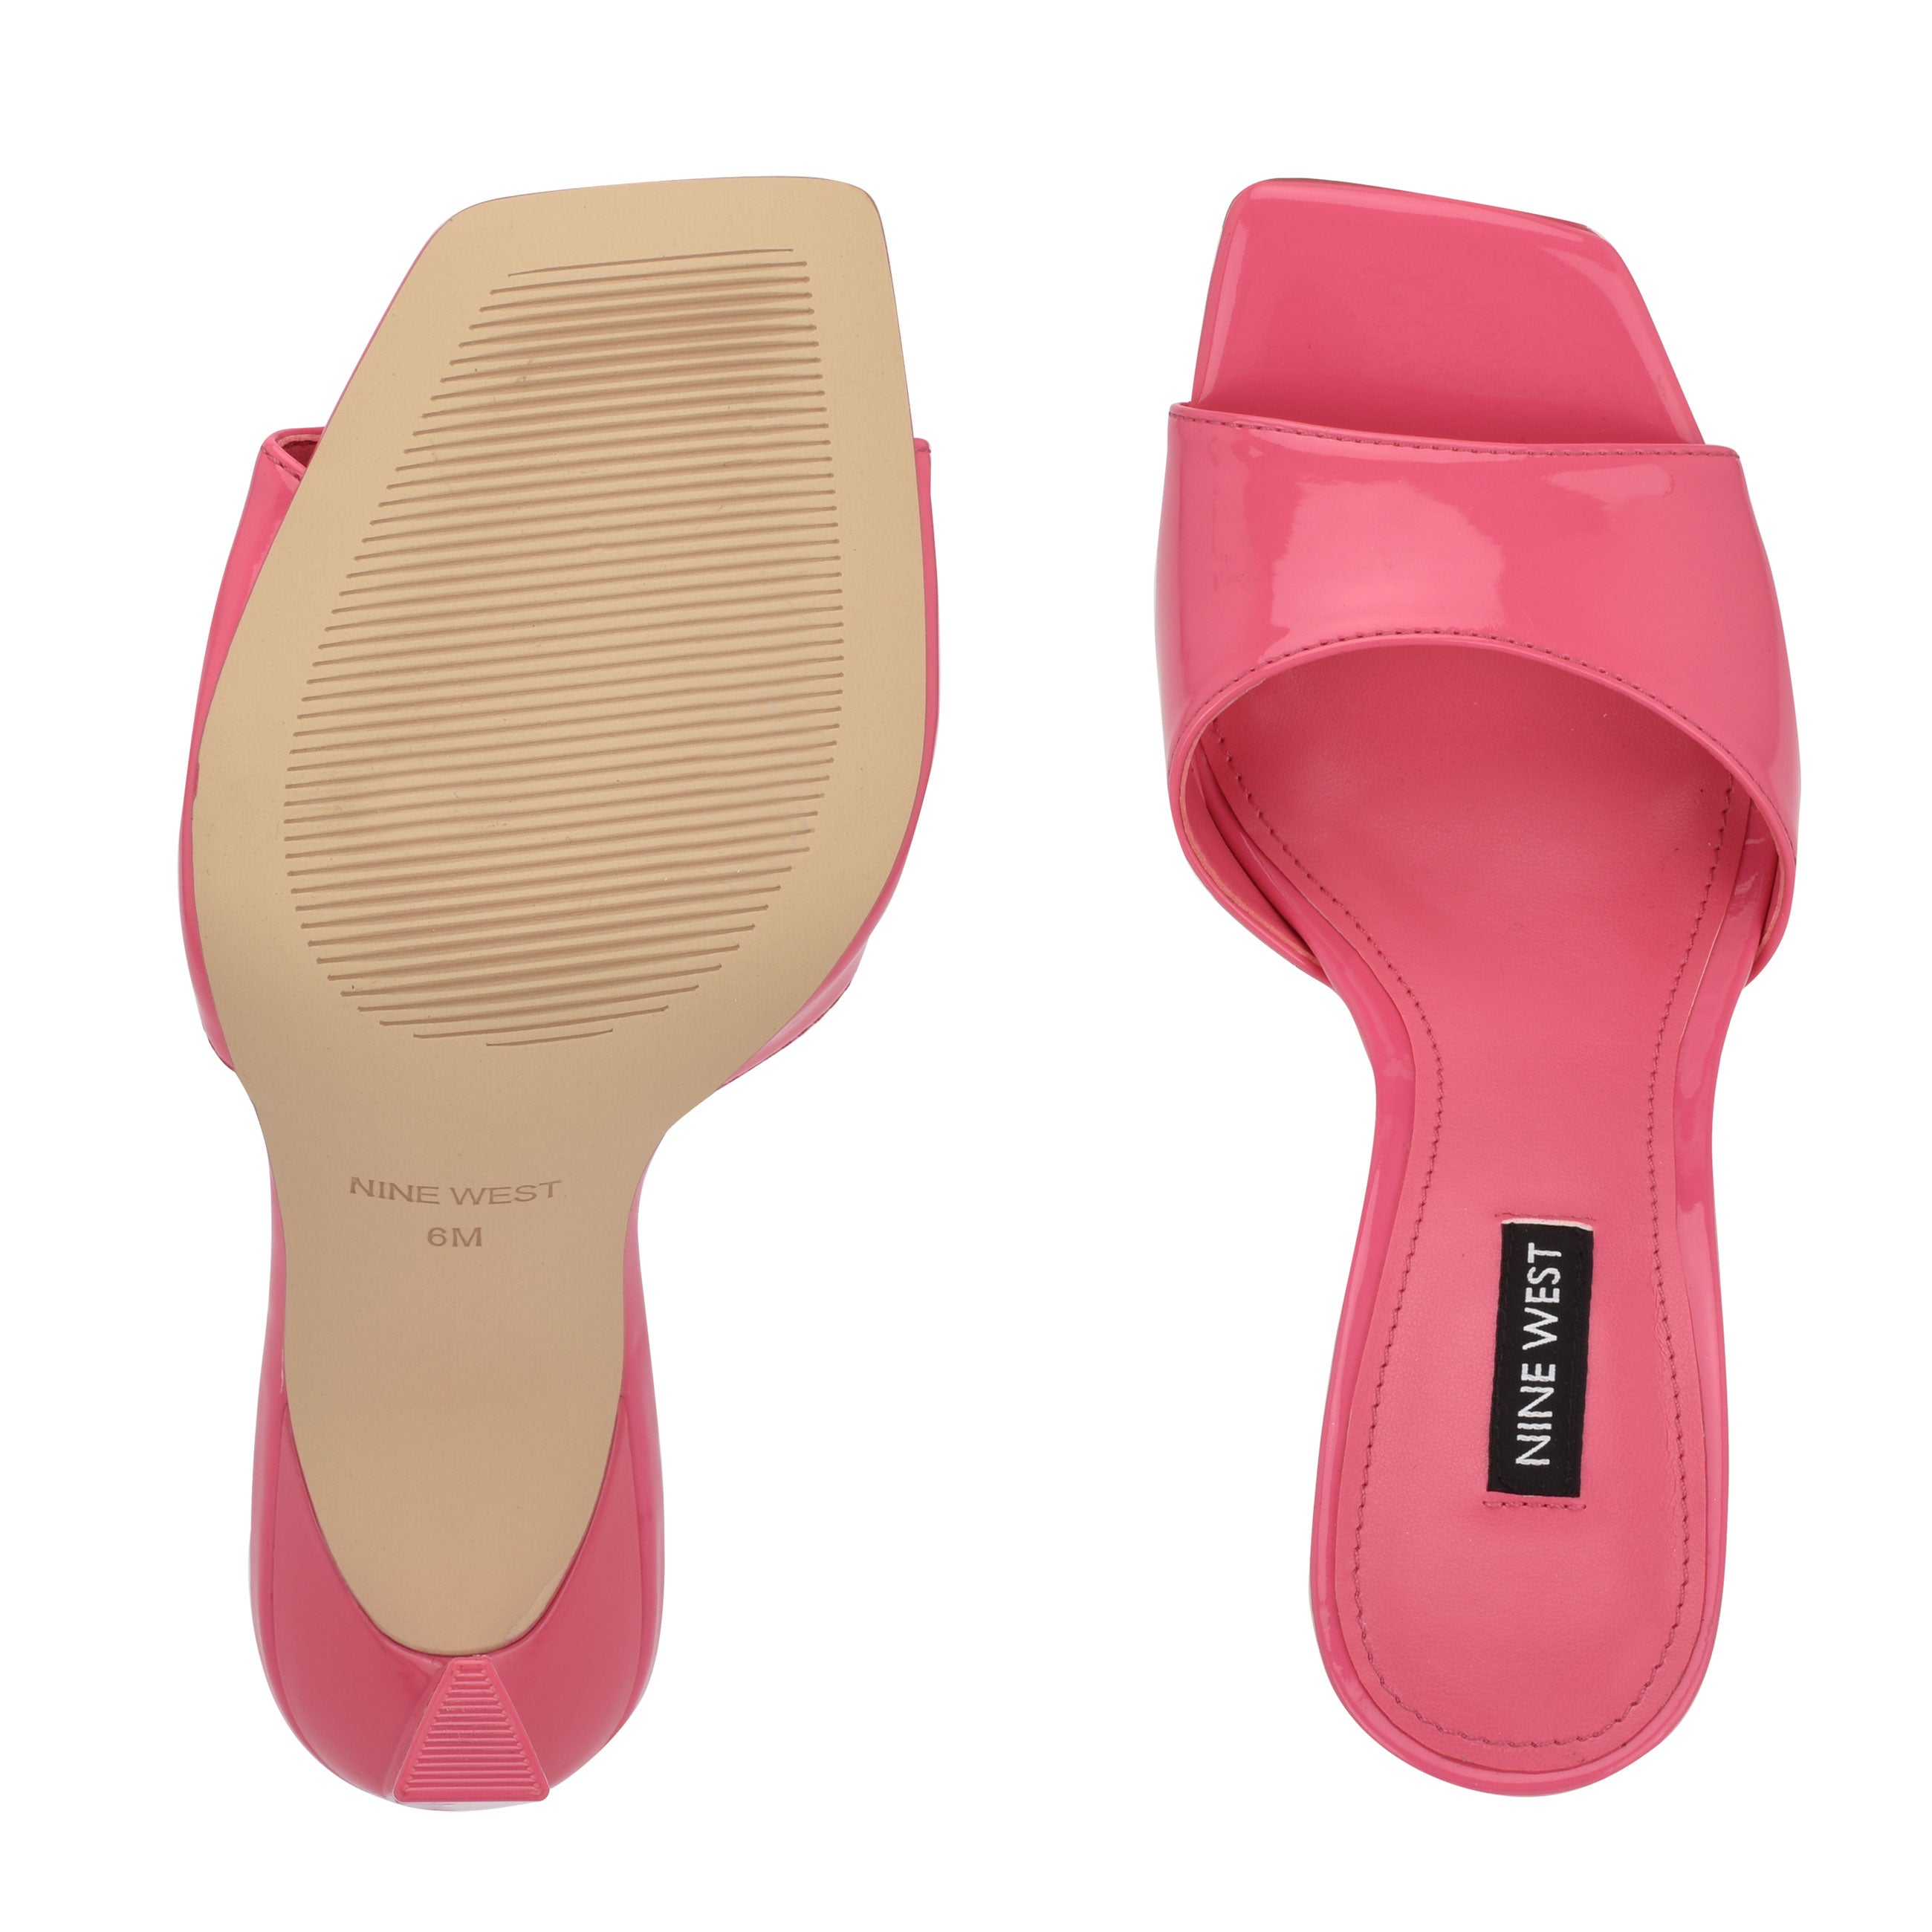 Nine West: Haveit Heeled Slide Sandals reduce to  $11.08